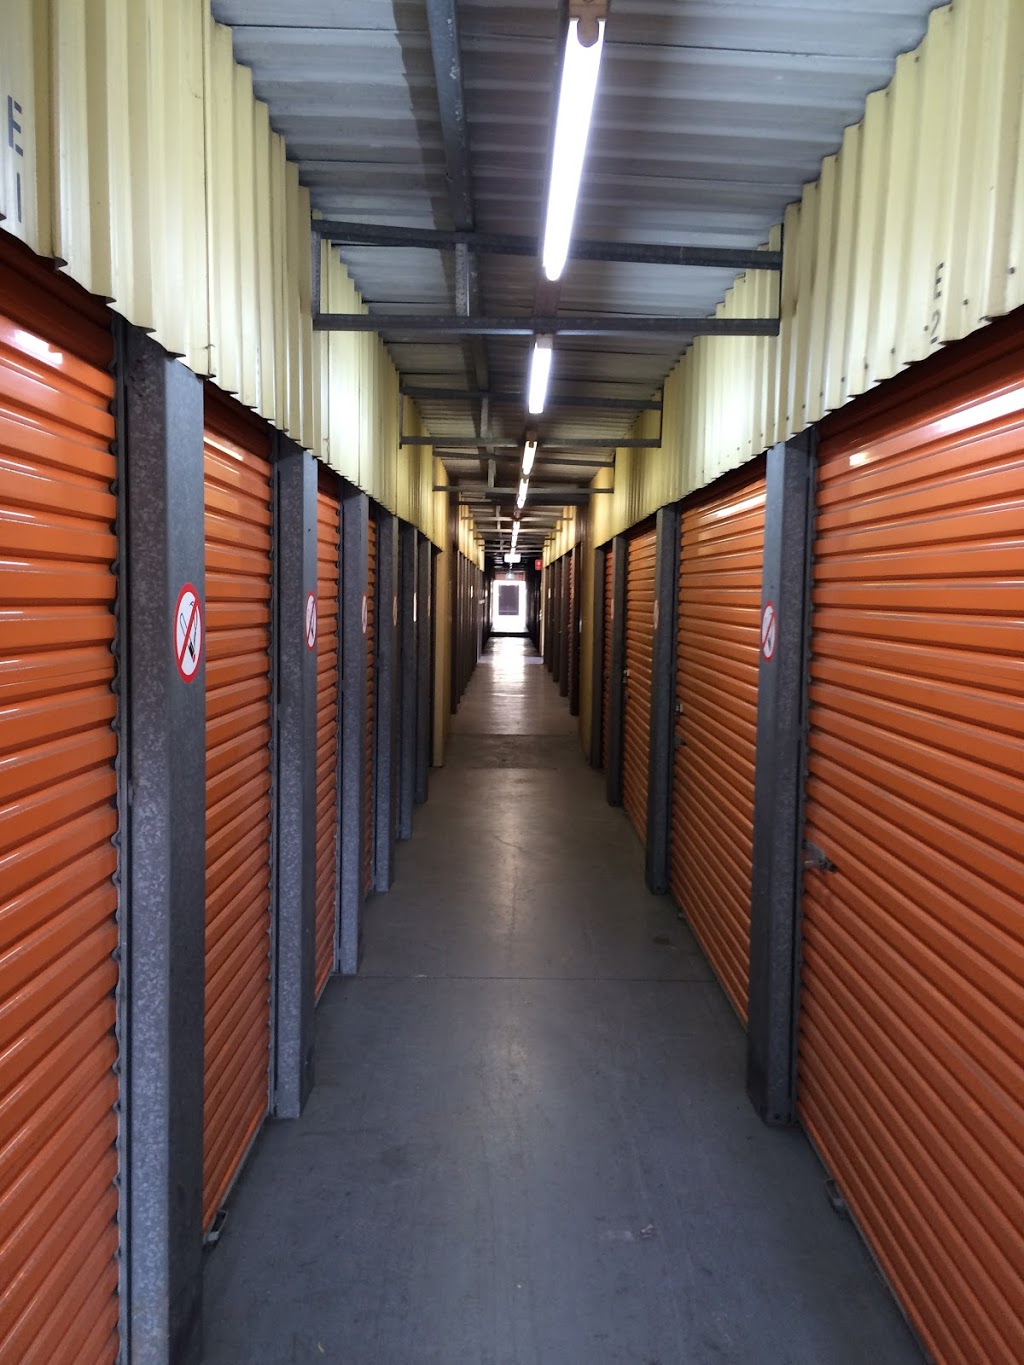 Kennards Self Storage Airds Road Campbelltown | storage | 159 Airds Rd, Campbelltown NSW 2560, Australia | 0246261995 OR +61 2 4626 1995